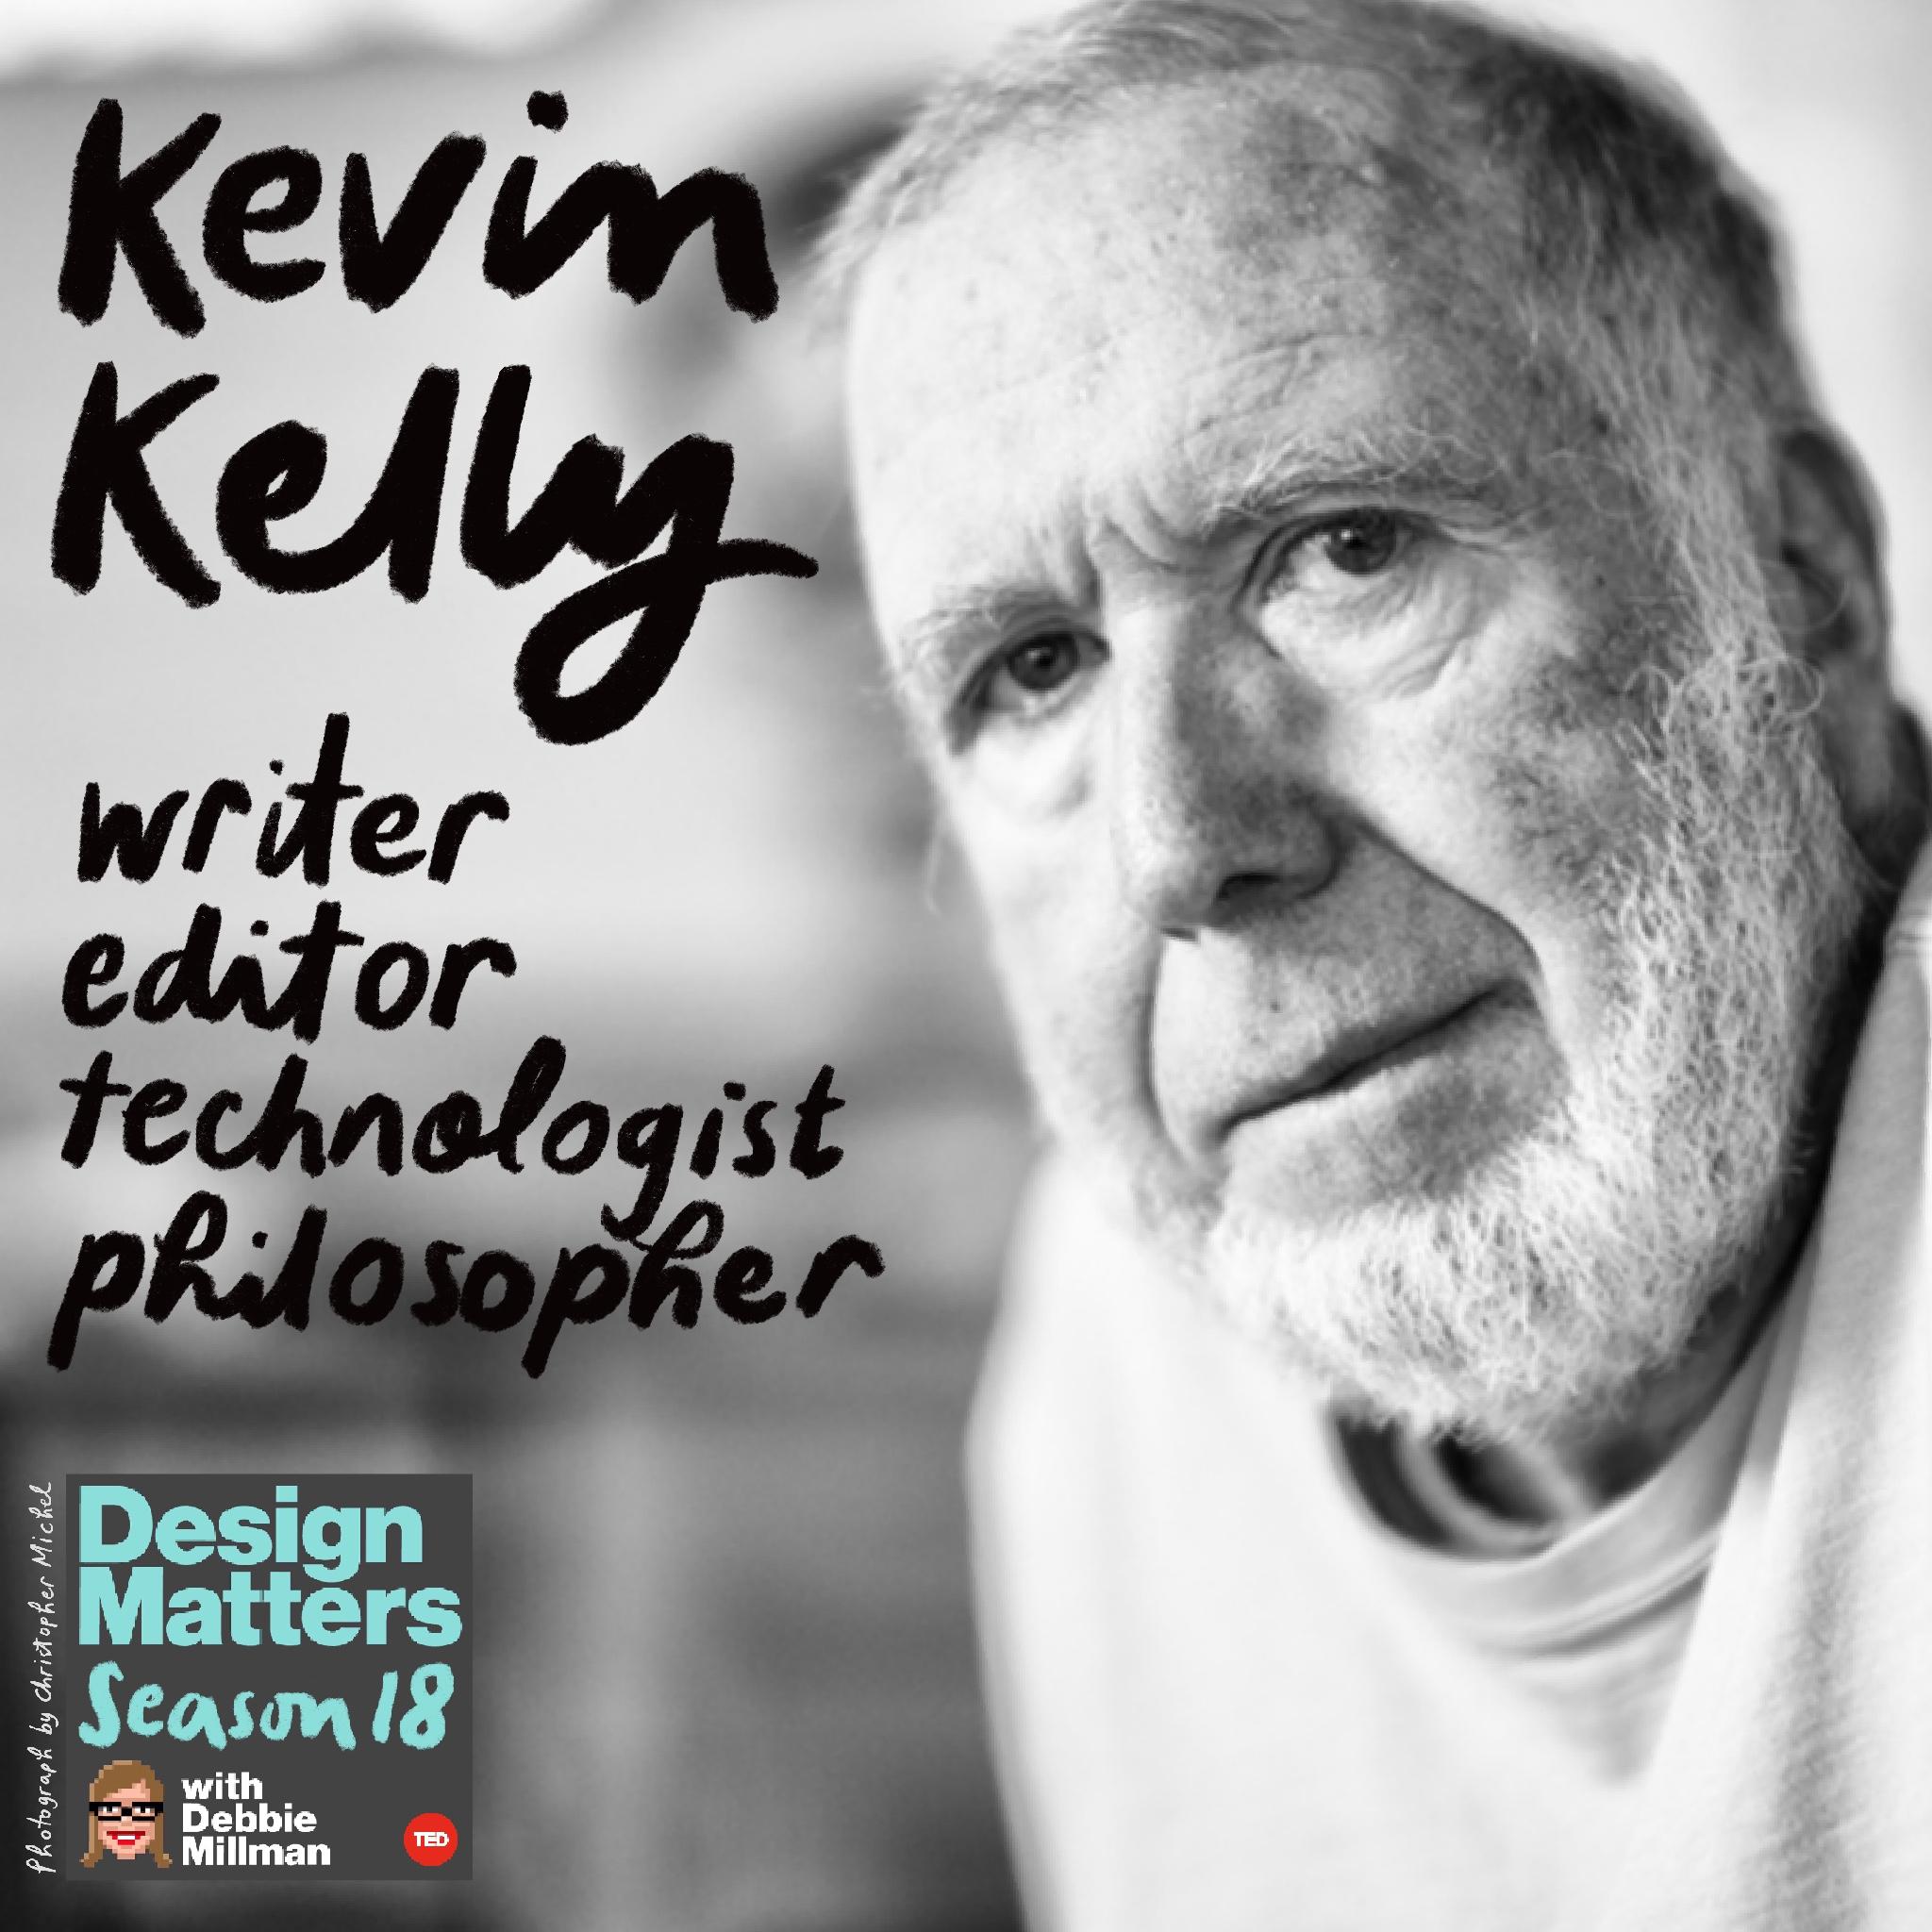 Thumbnail for "Kevin Kelly".